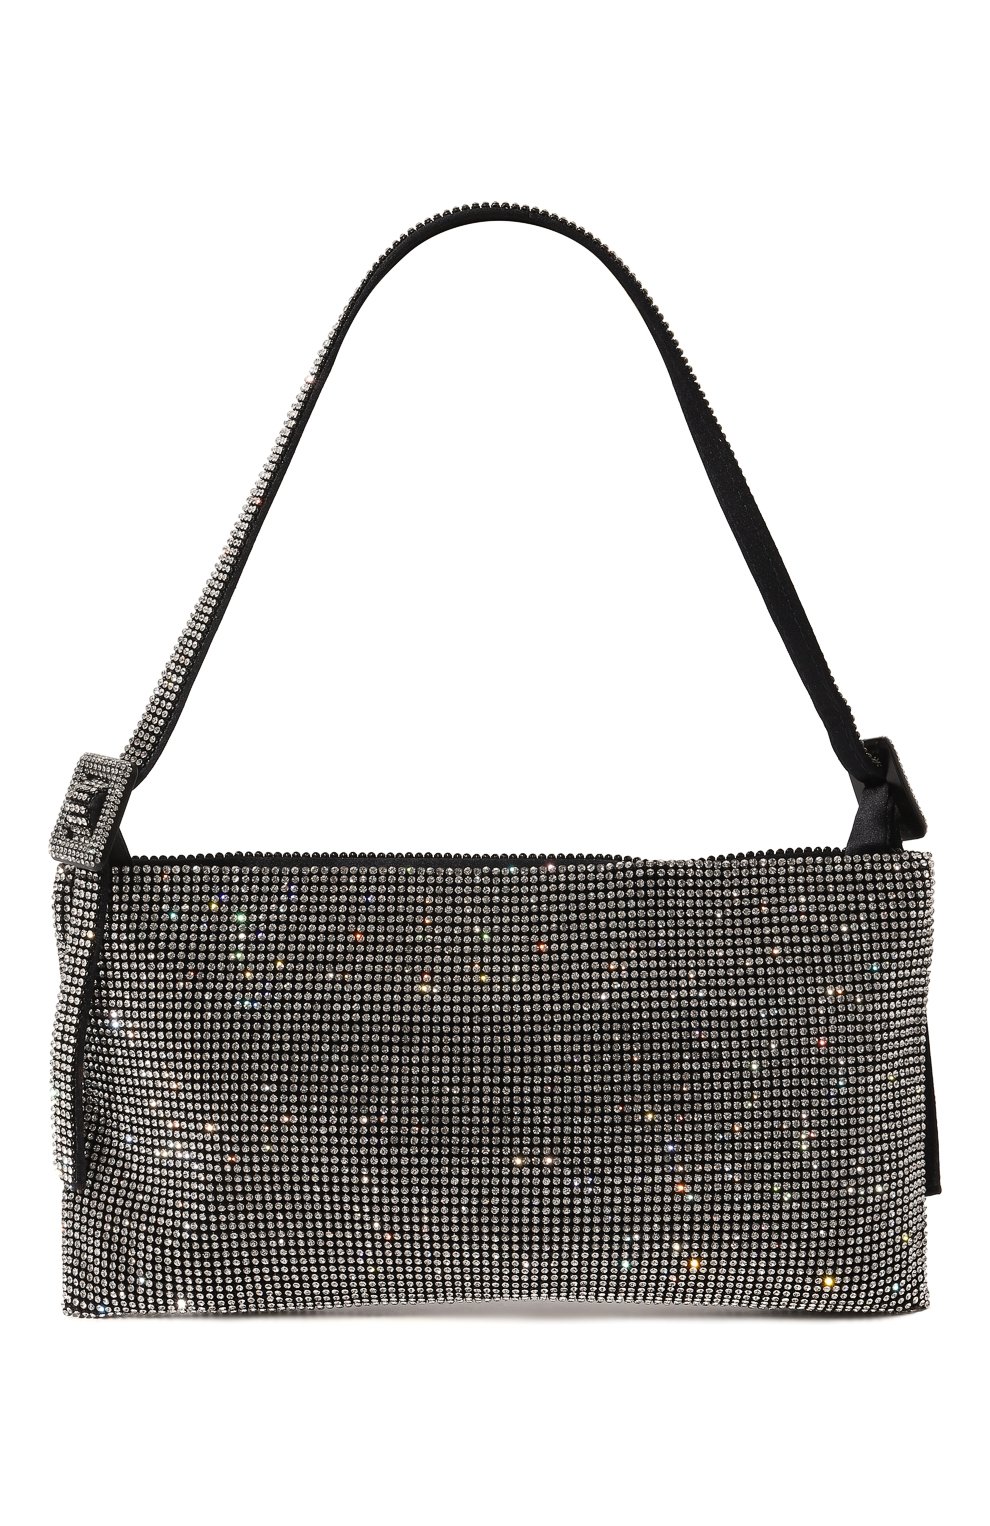 Женская сумка best friend BENEDETTA BRUZZICHES серебряного цвета, арт. 5227 | Фото 1 (Женское Кросс-КТ: Вечерняя сумка; Материал: Металл; Сумки-технические: Сумки top-handle; Размер: small)